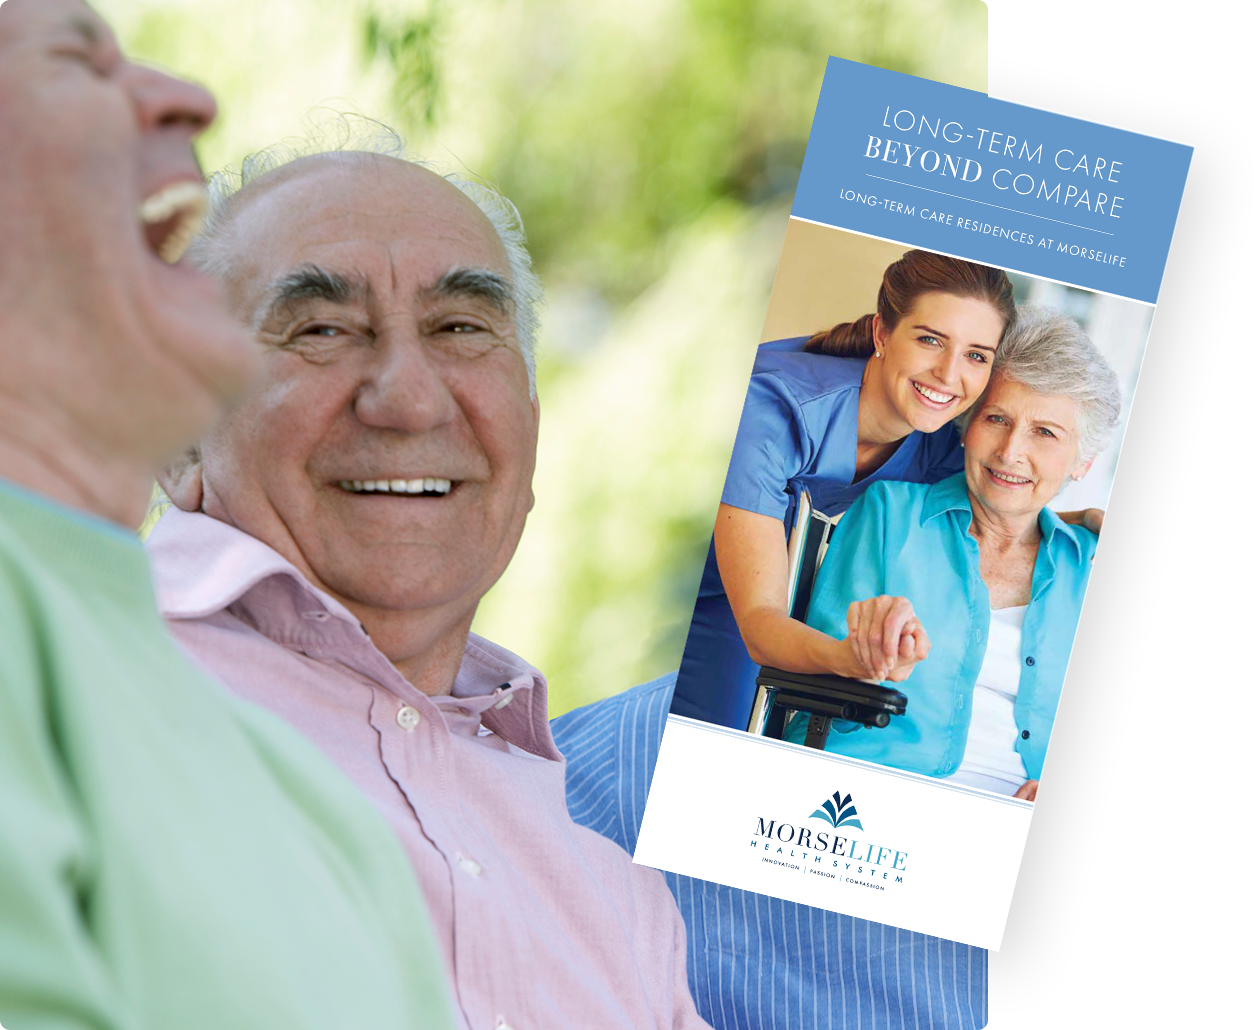 Long-term Care brochure with older men enjoying numerous activities